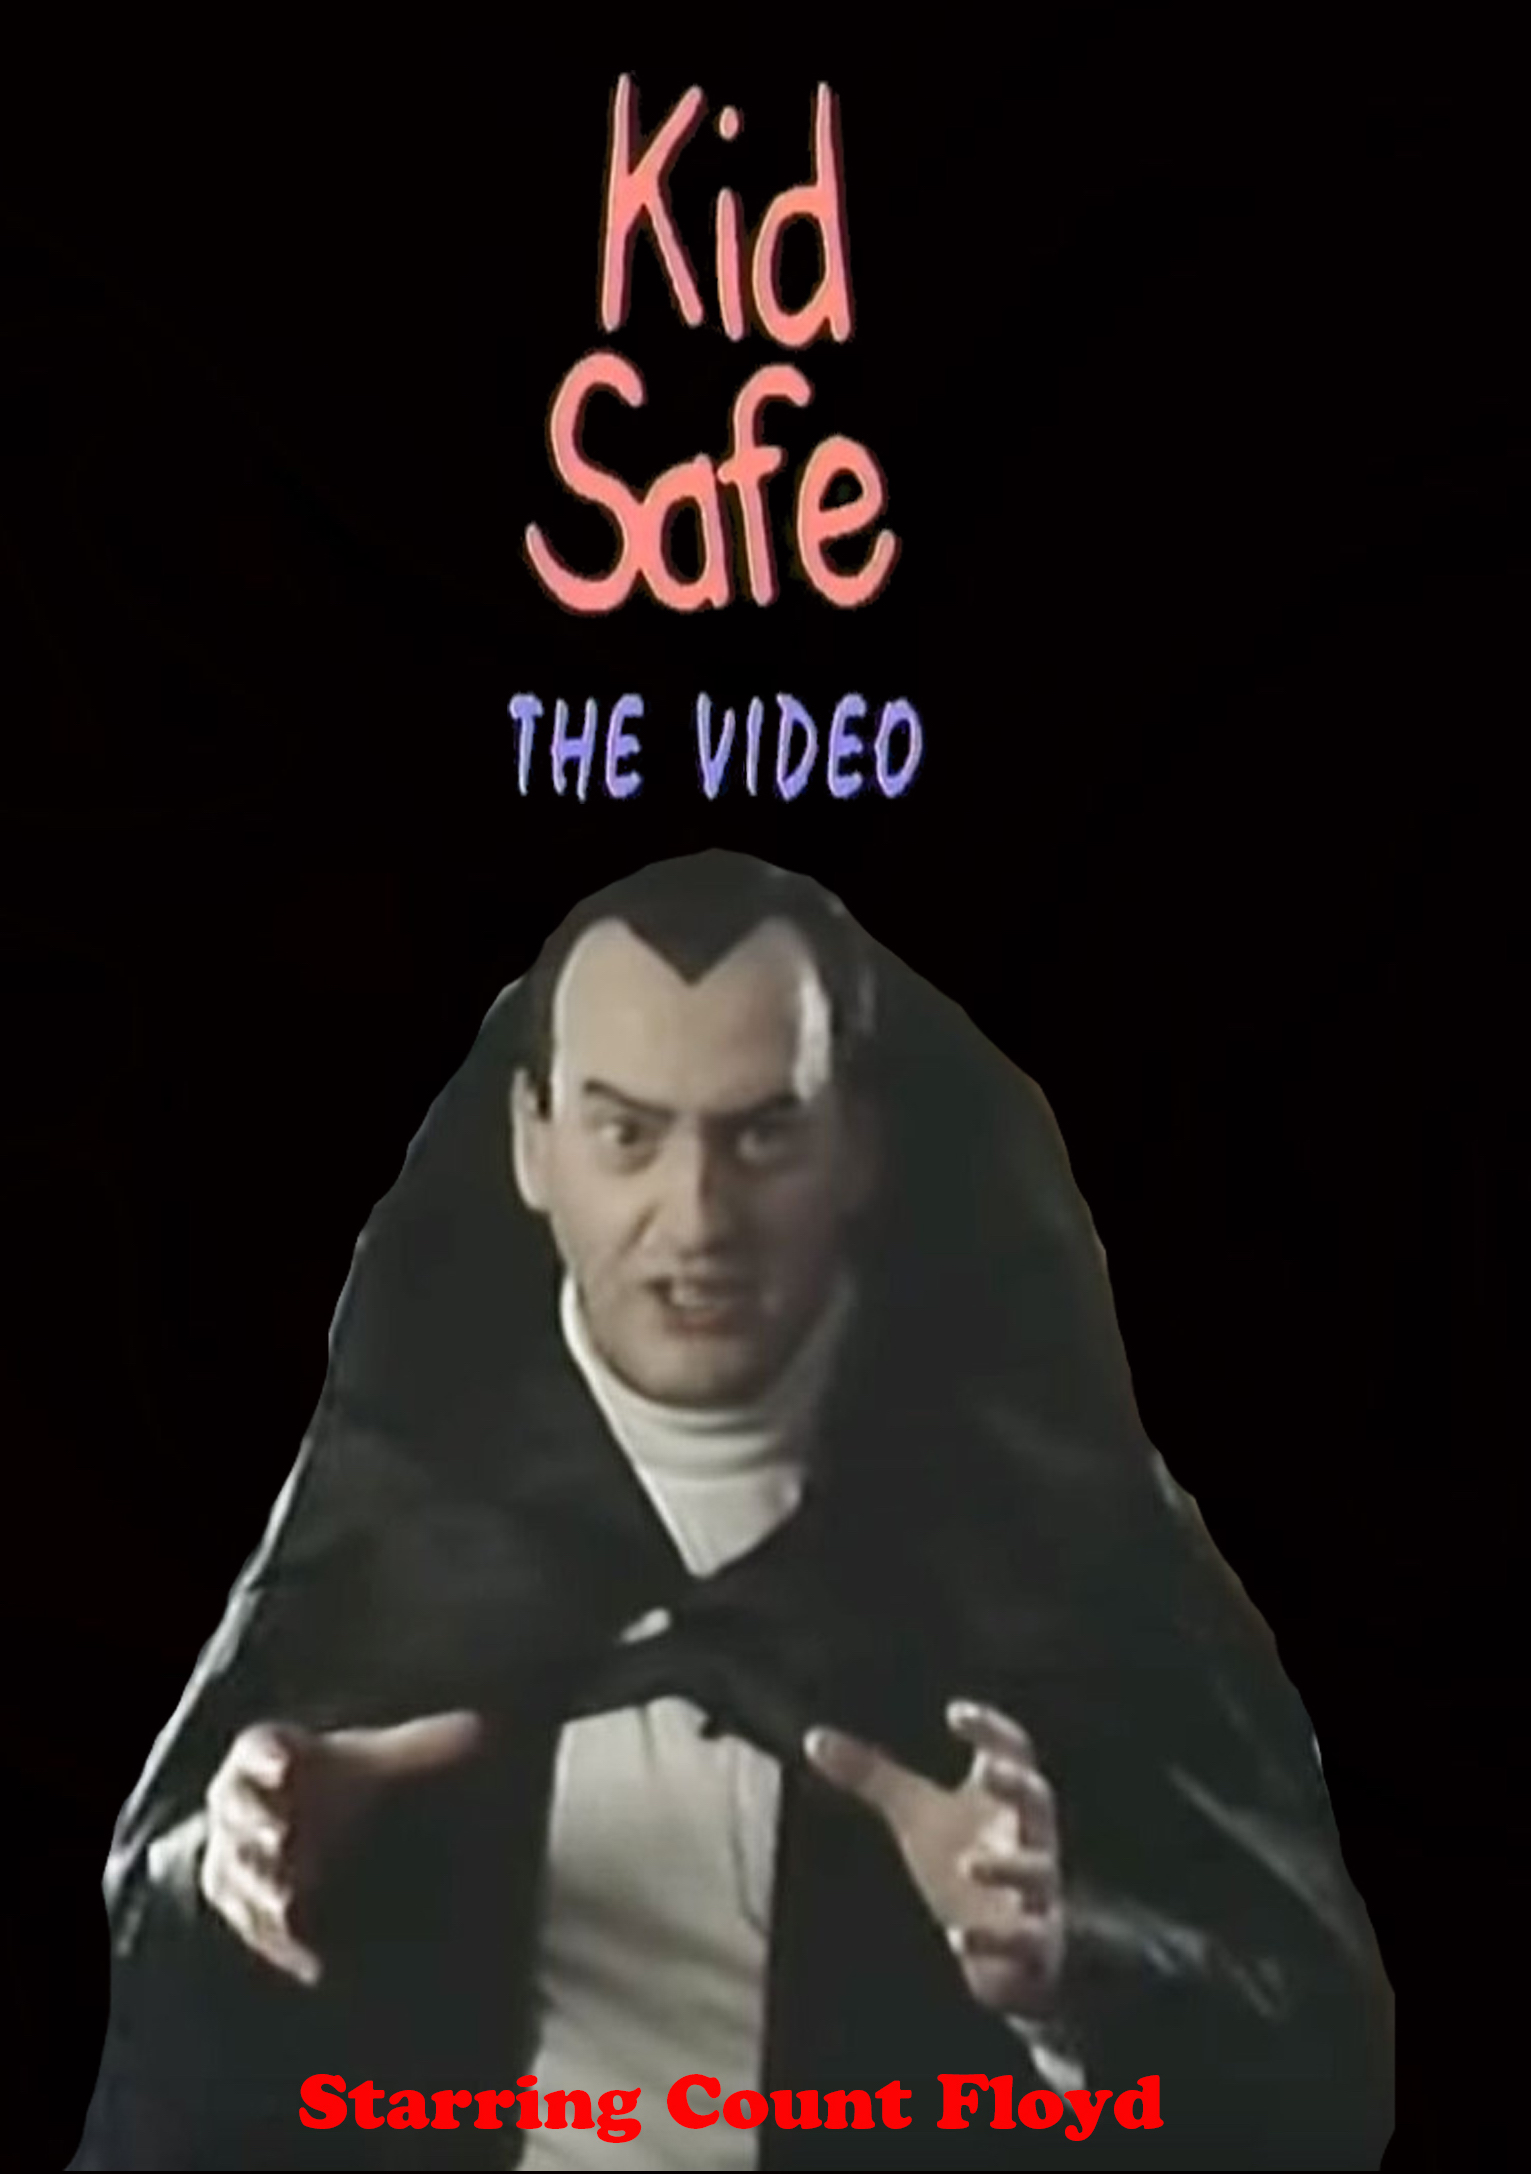 Kid Safe: The Video (1988) Screenshot 2